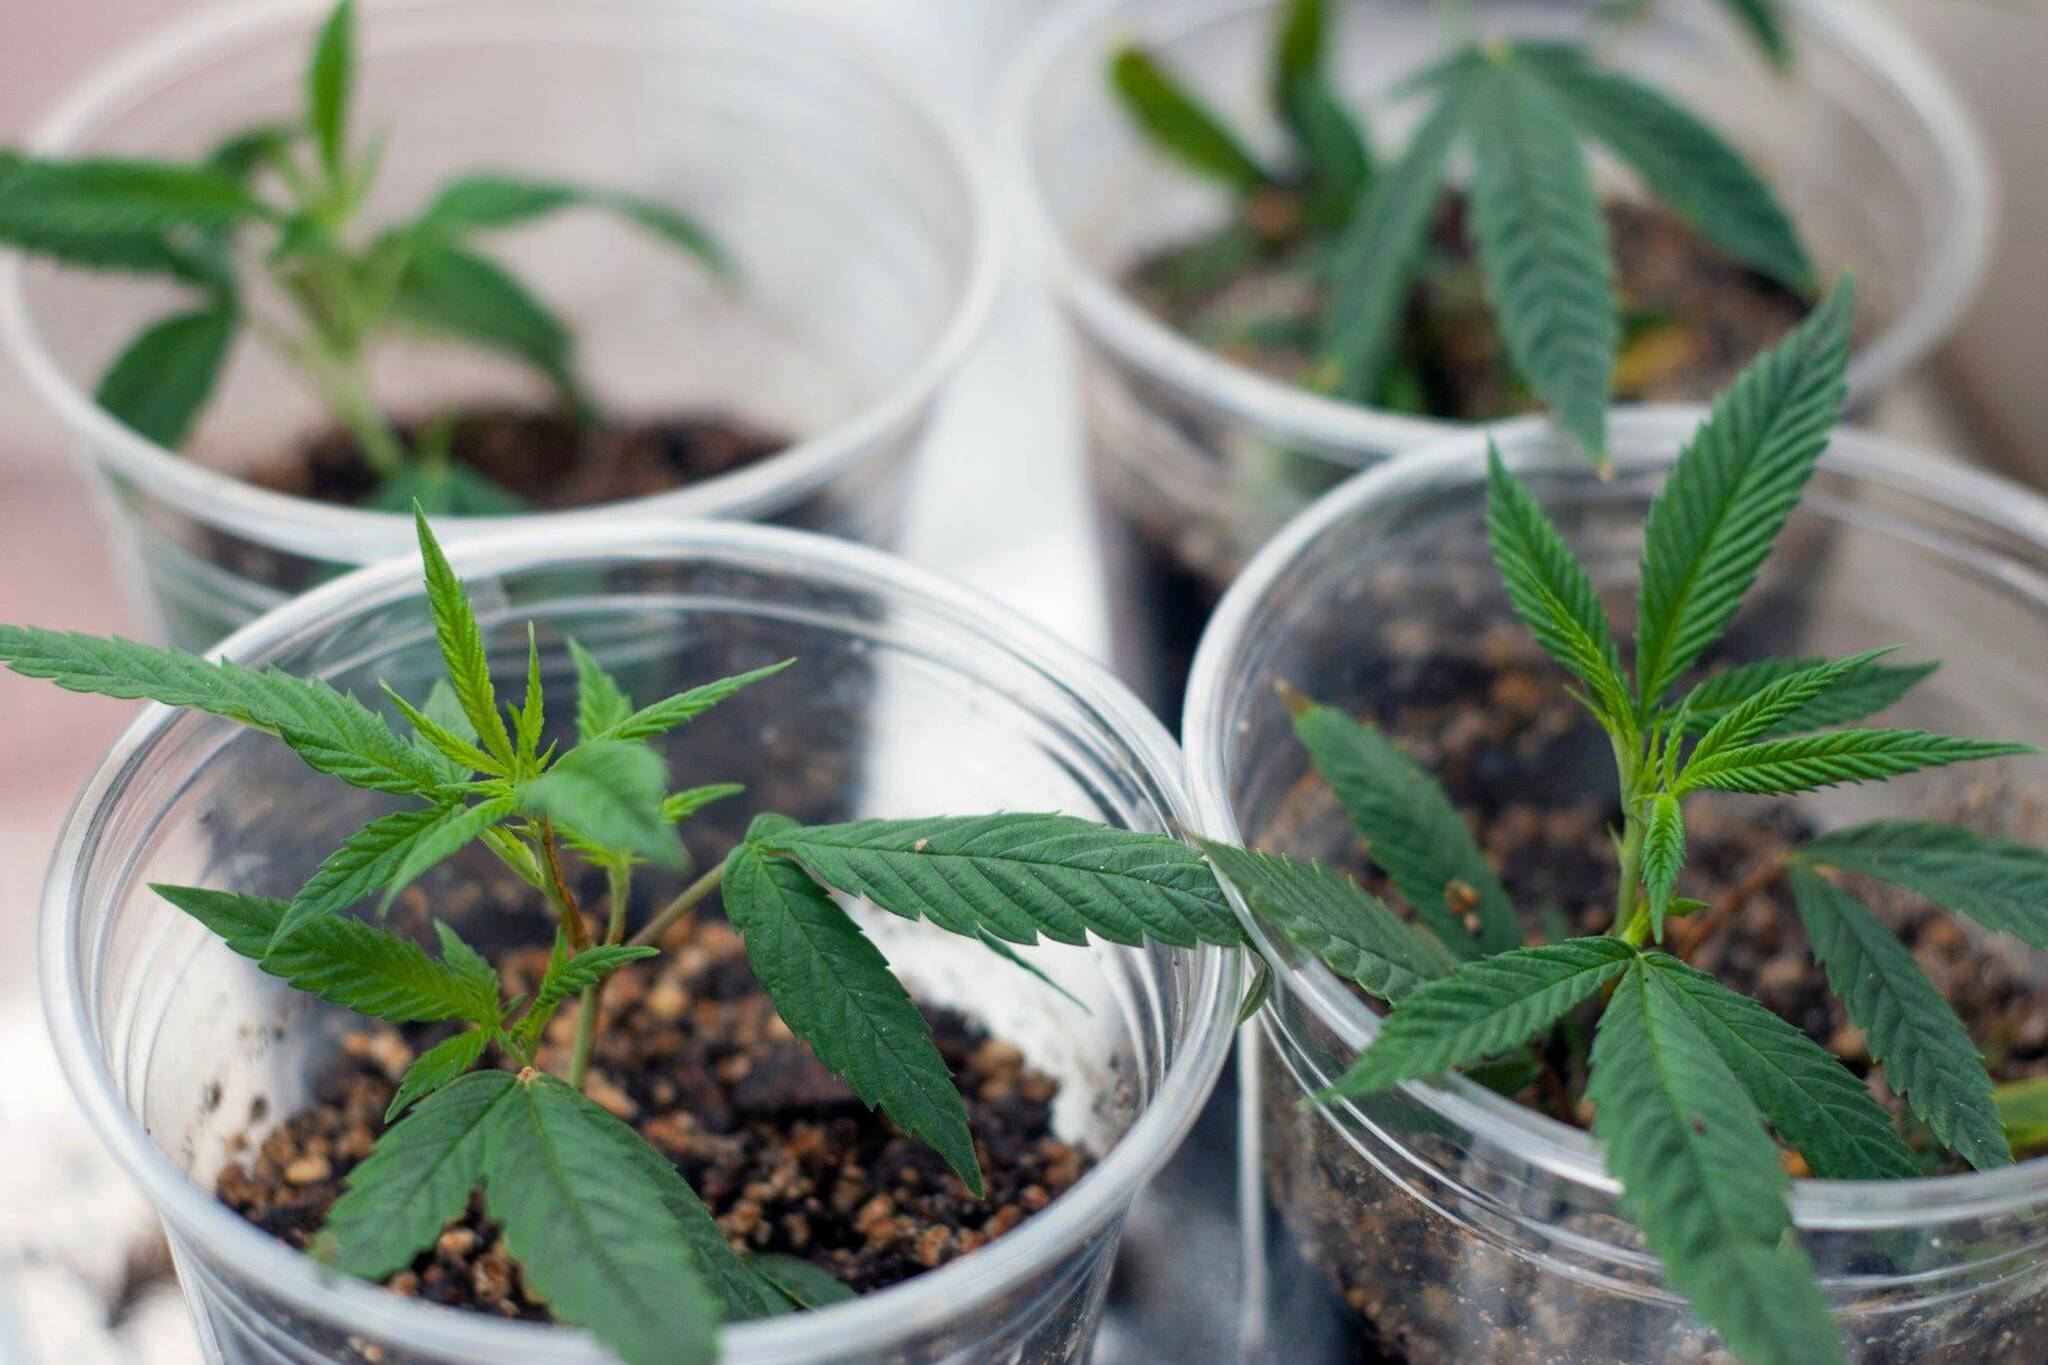 How To Grow Marijuana - Beginners Guide To Growing Cannabis